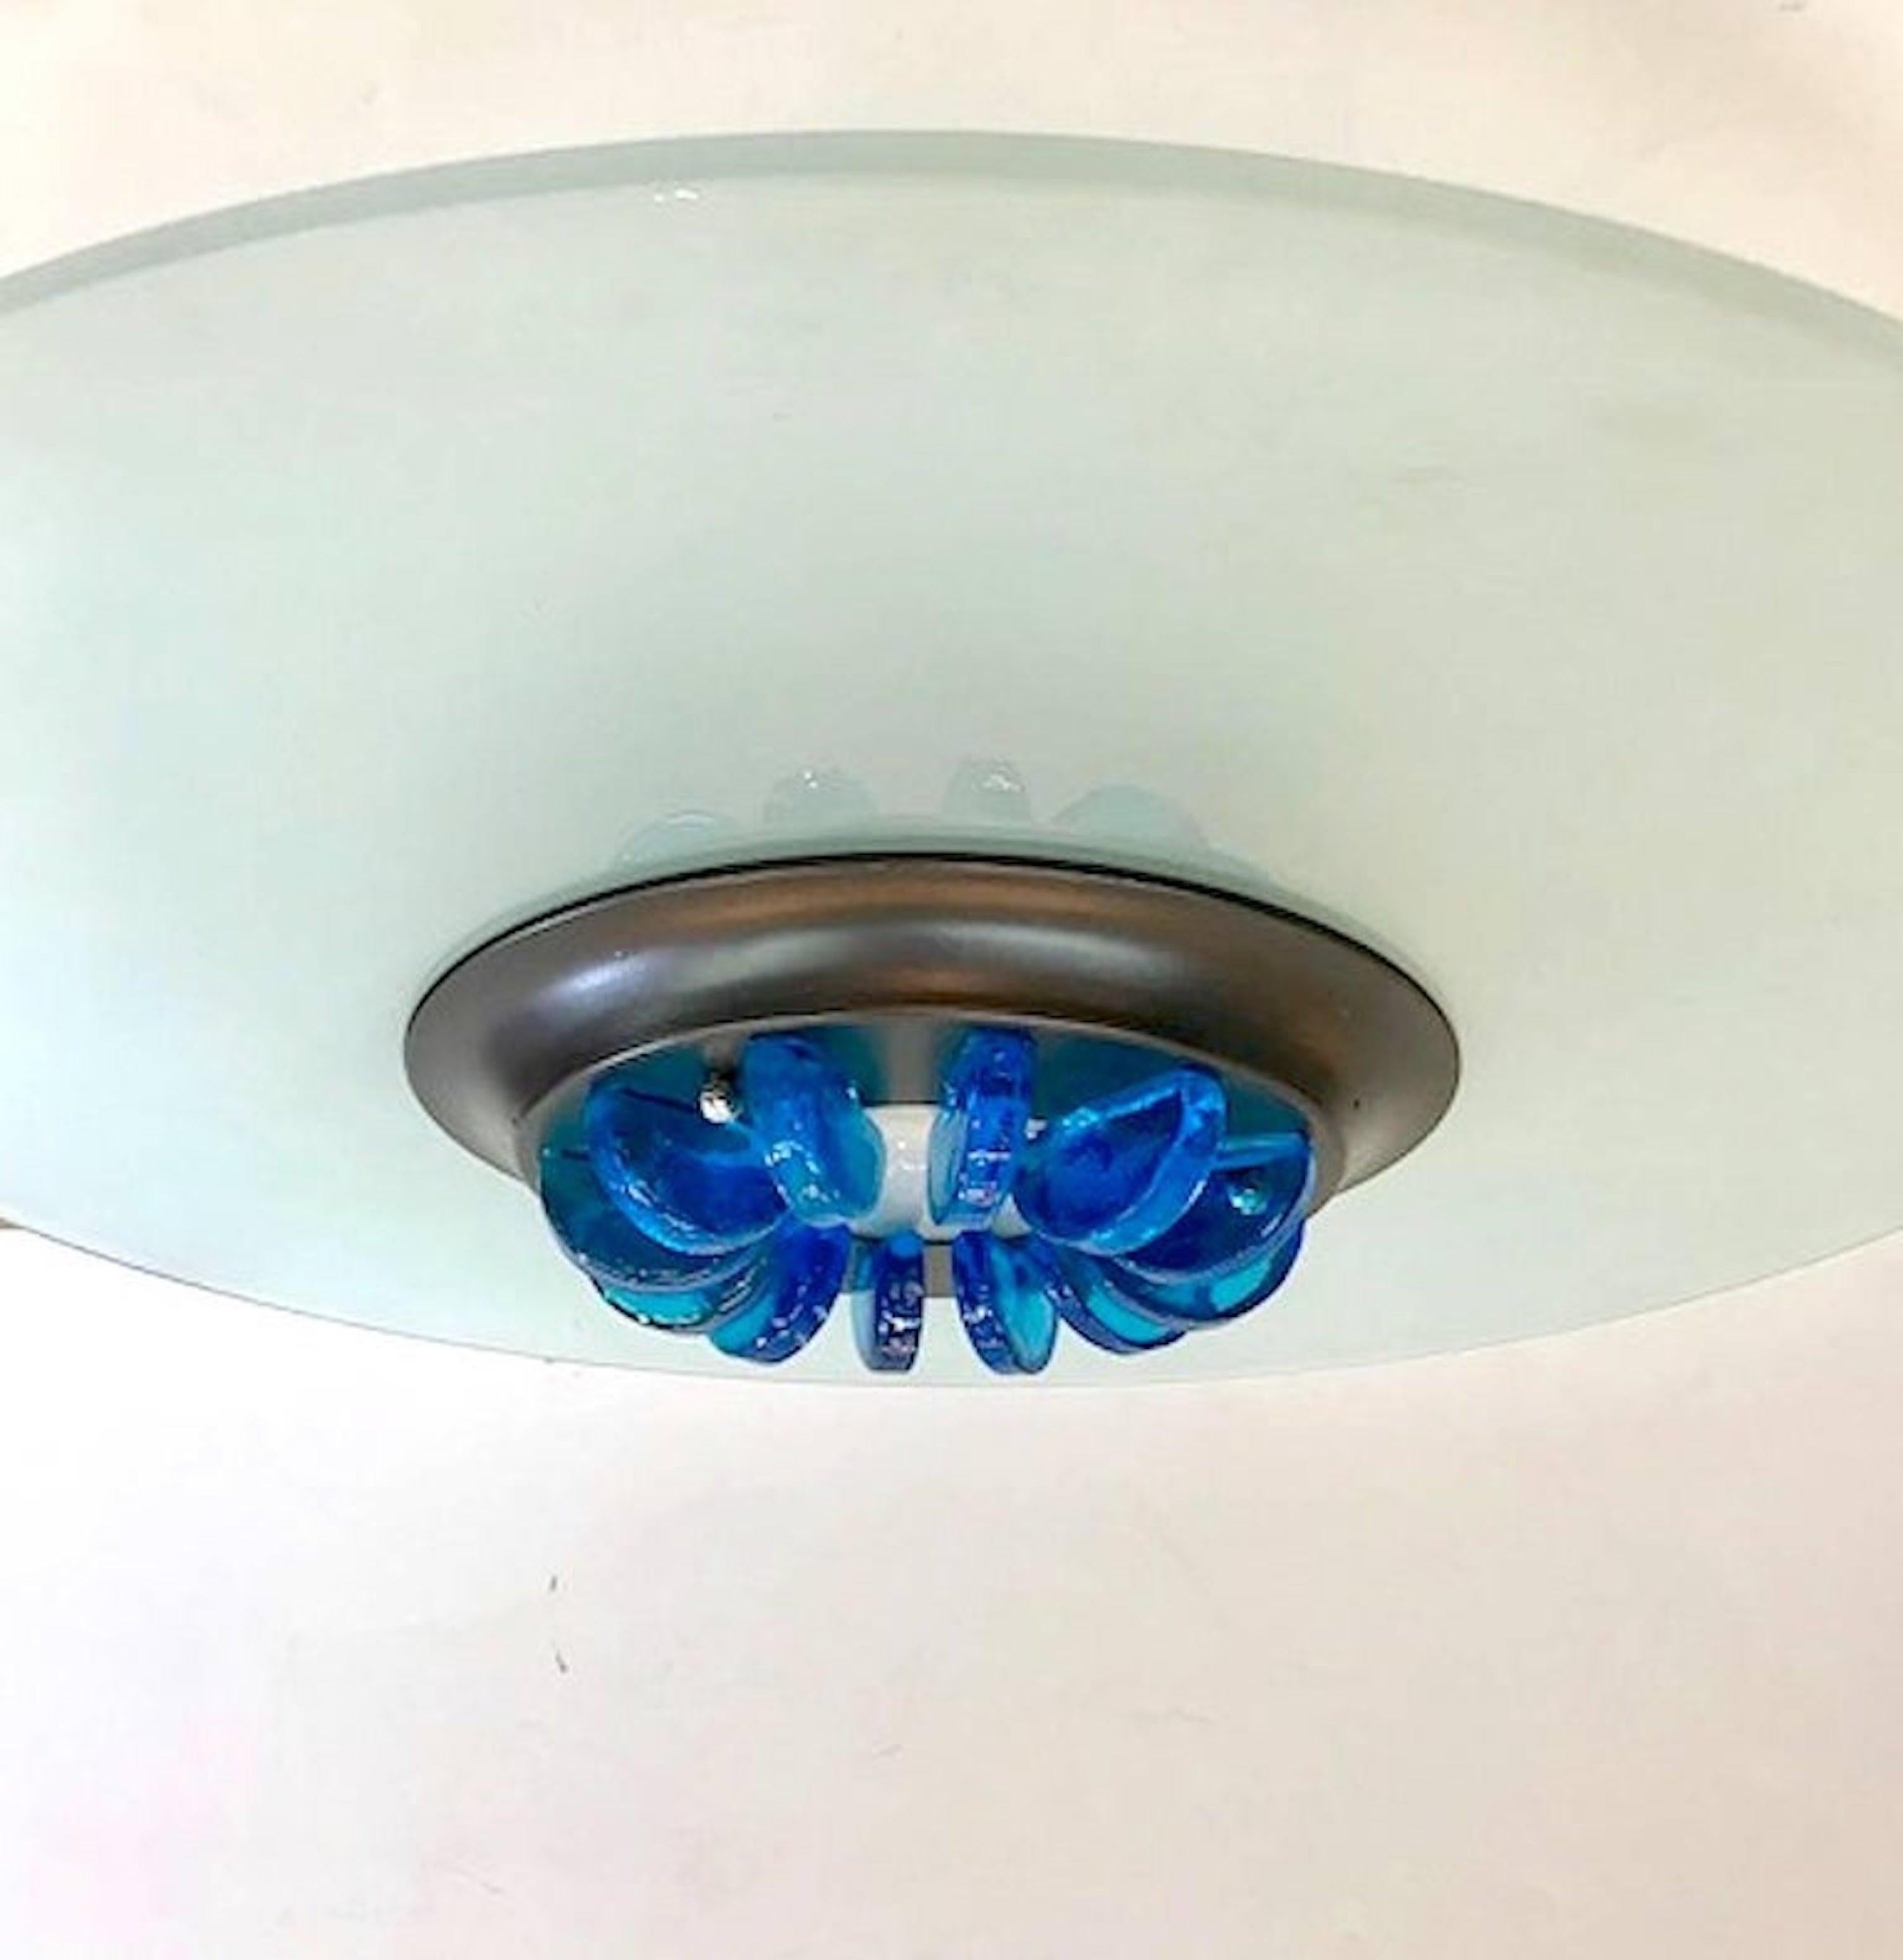 An Italian 1980s Italian ceiling mount light in the Memphis style.
24